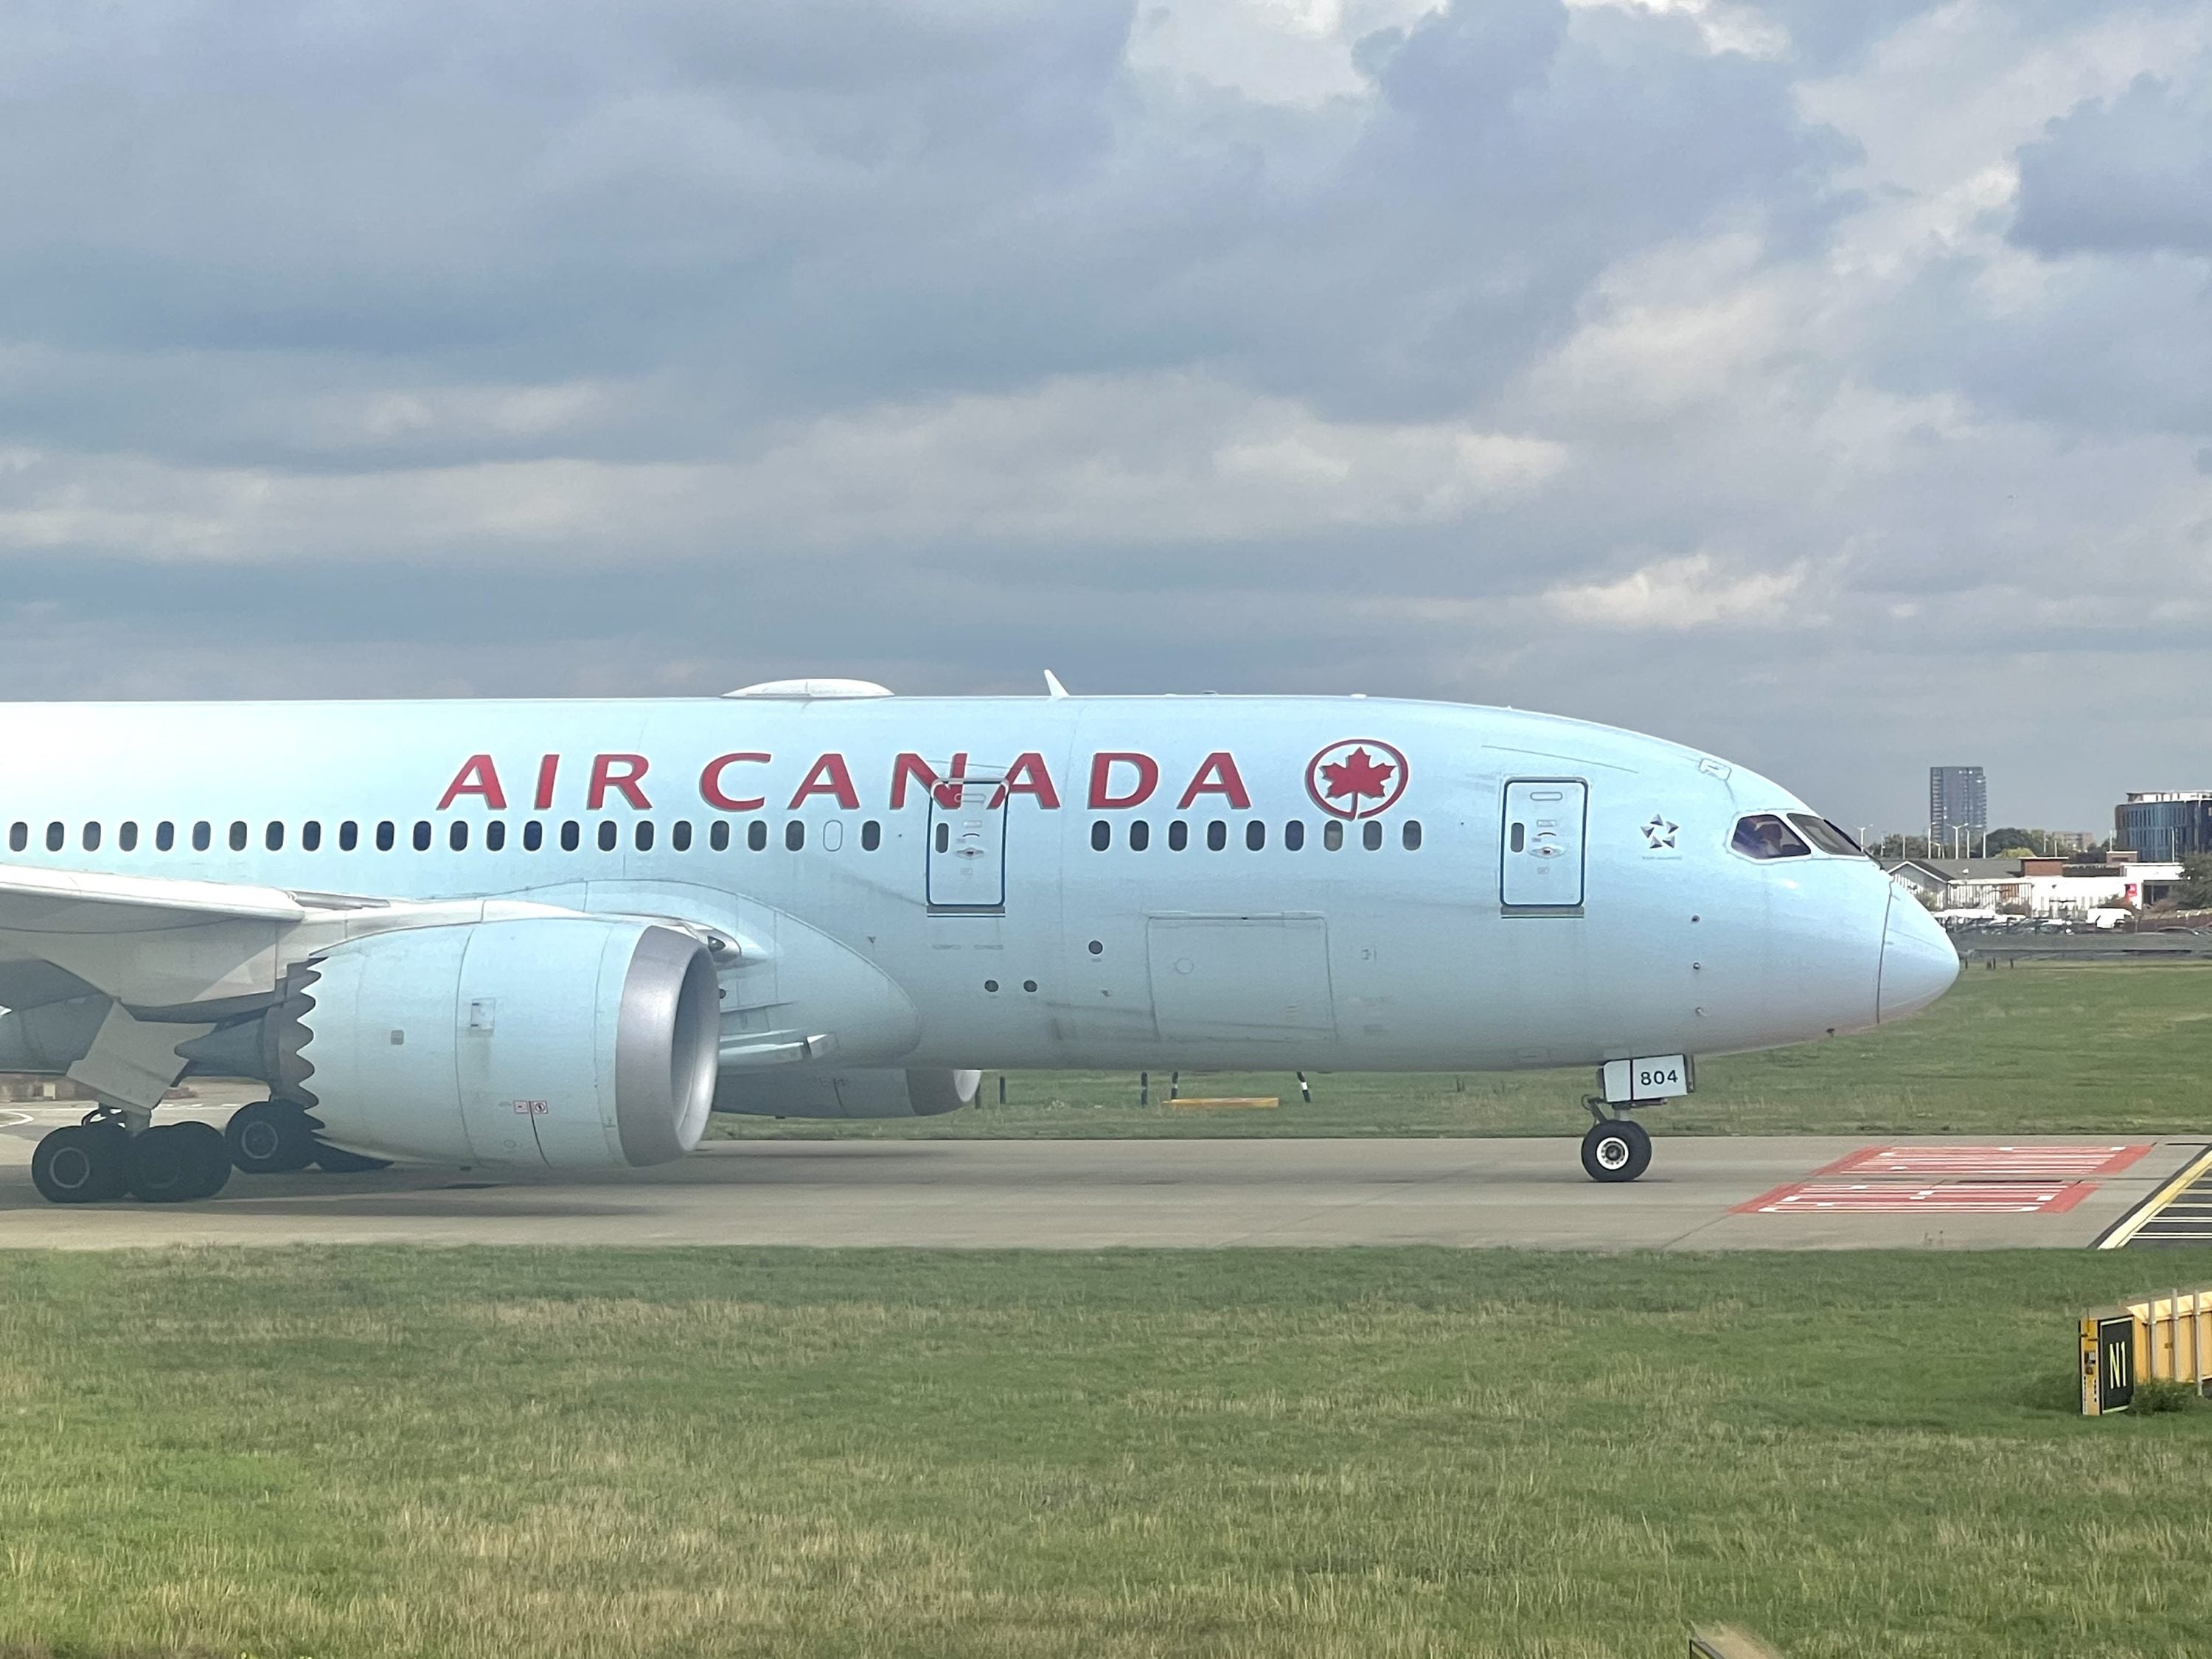 Air Canada Dreamliner waiting to depart London Heathrow